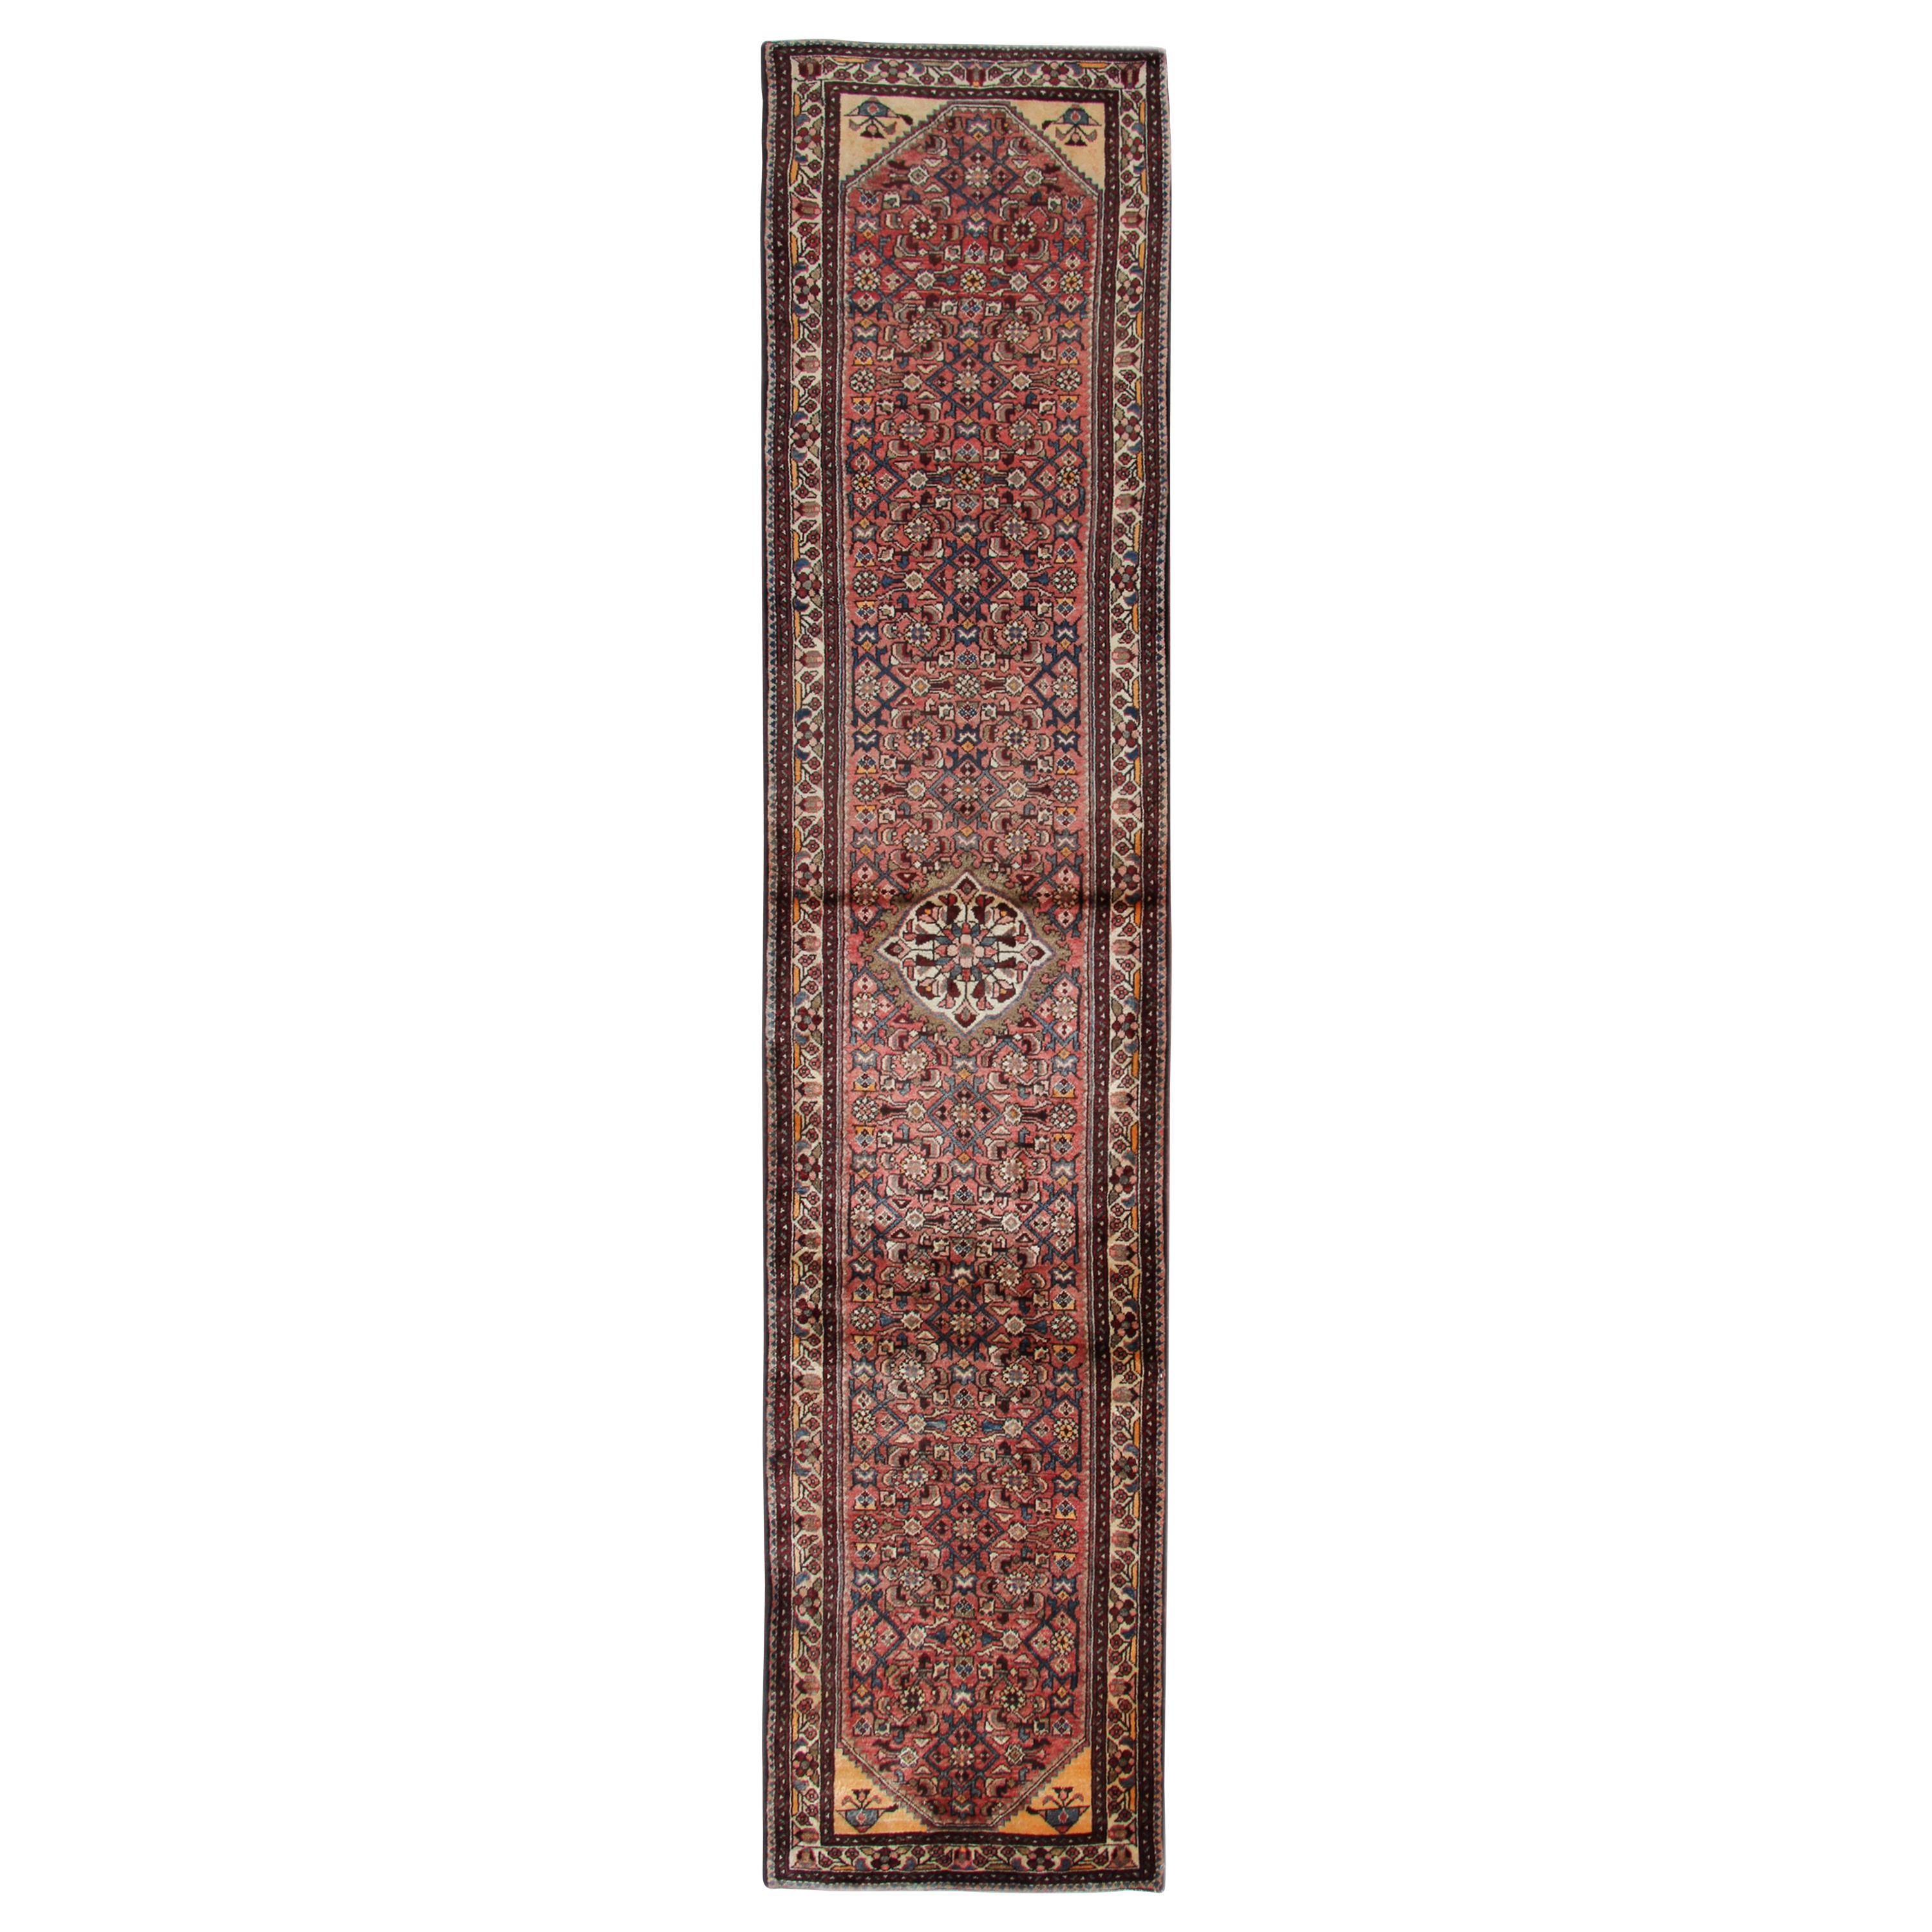 Antique Handmade Carpet Runner Oriental Rug Traditional Wool Runner 390x85cm 